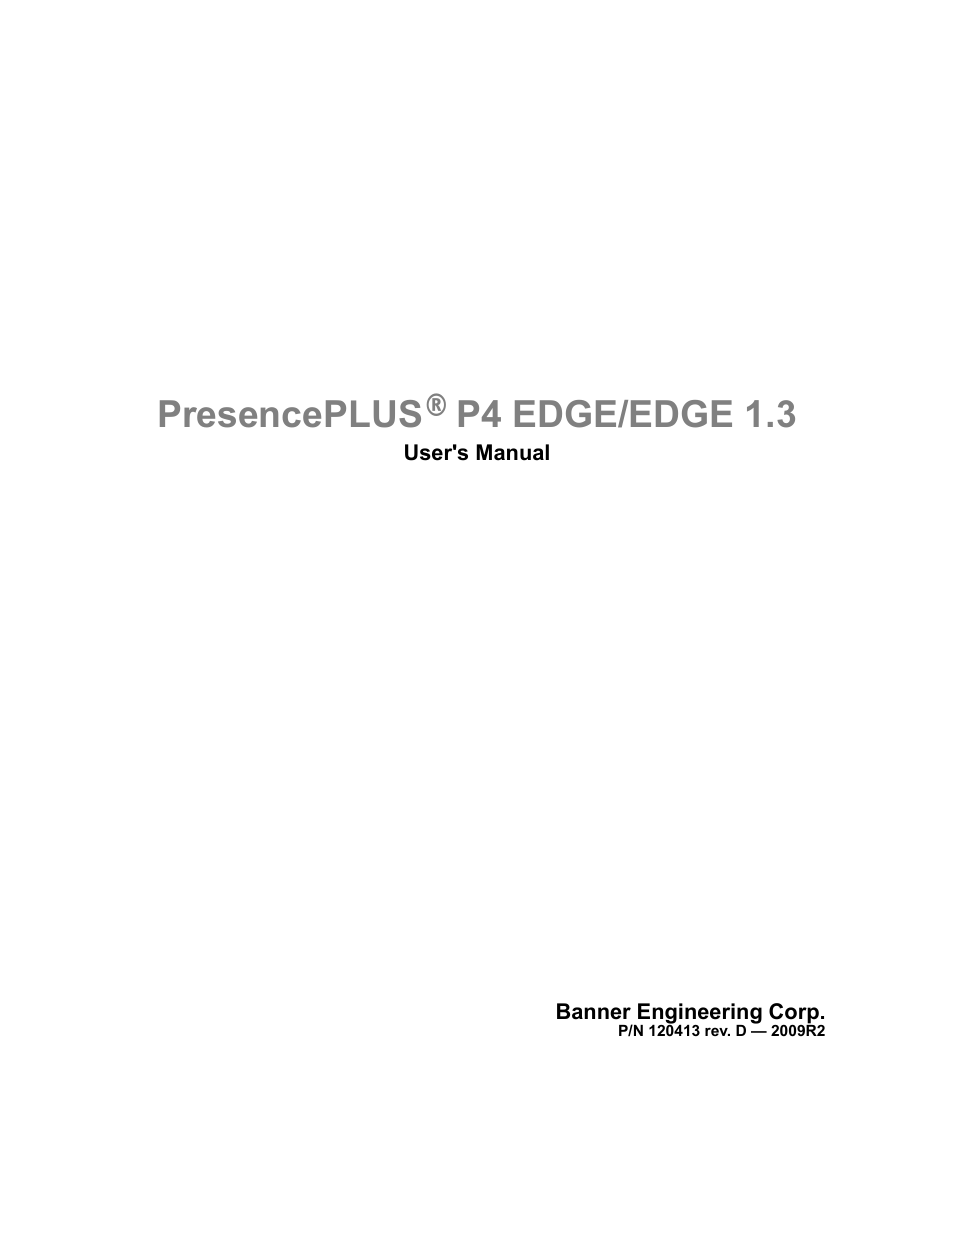 PresencePLUS P4 Series